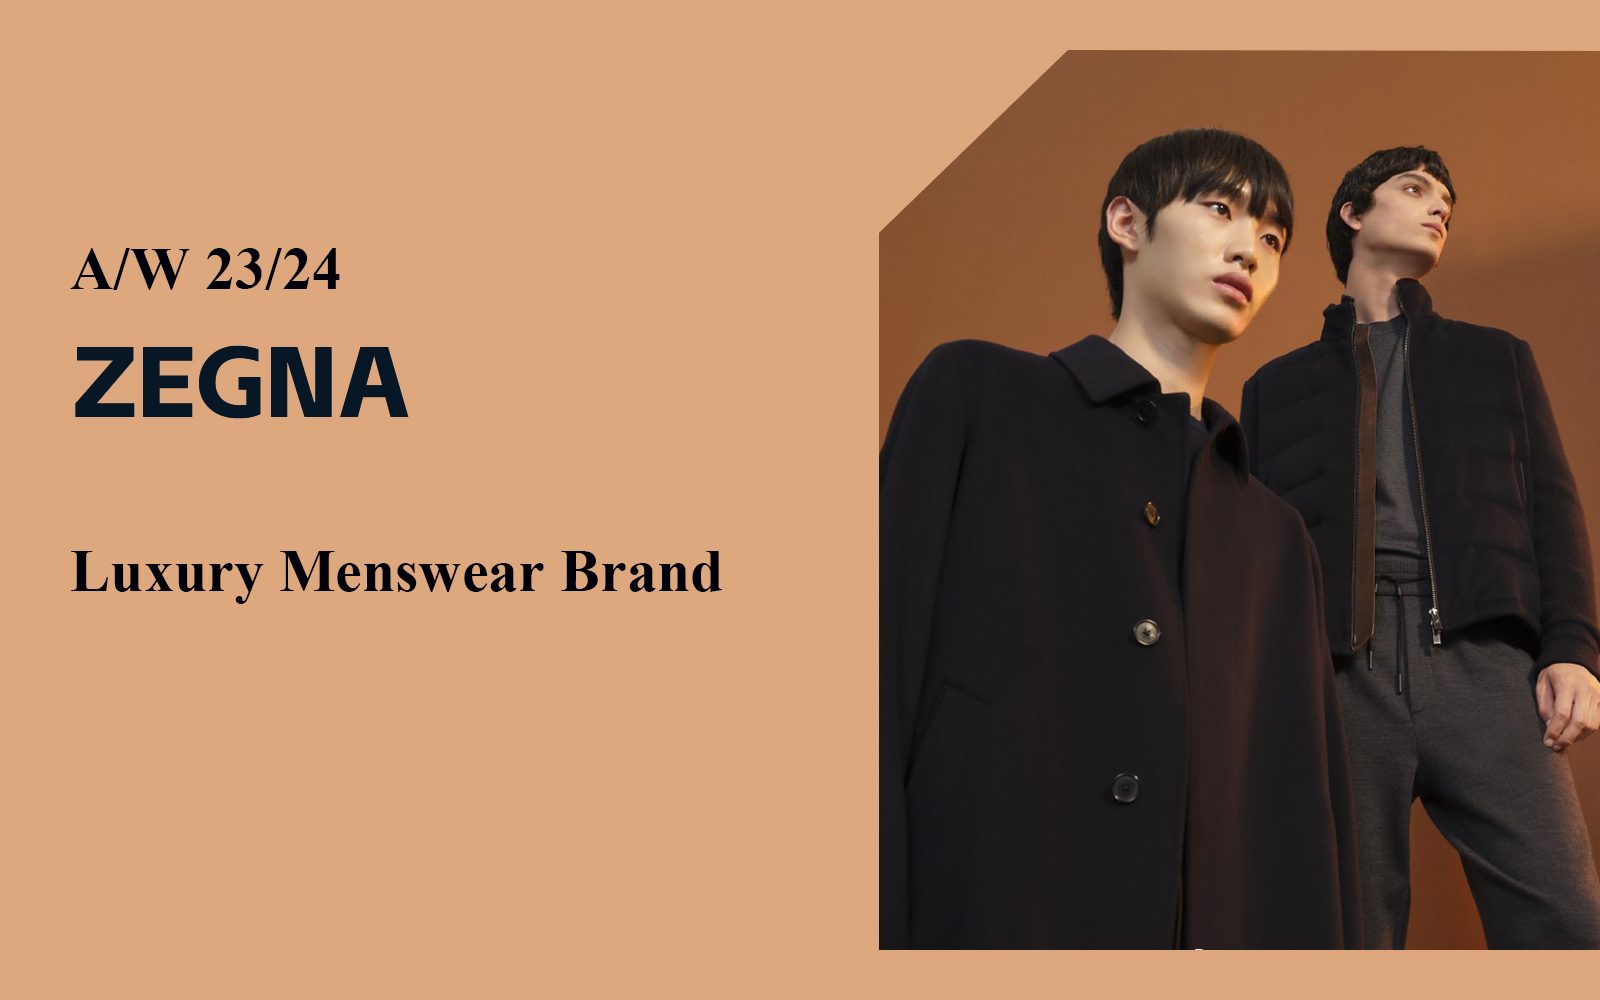 The Analysis of ZEGNA The Luxury Menswear Brand